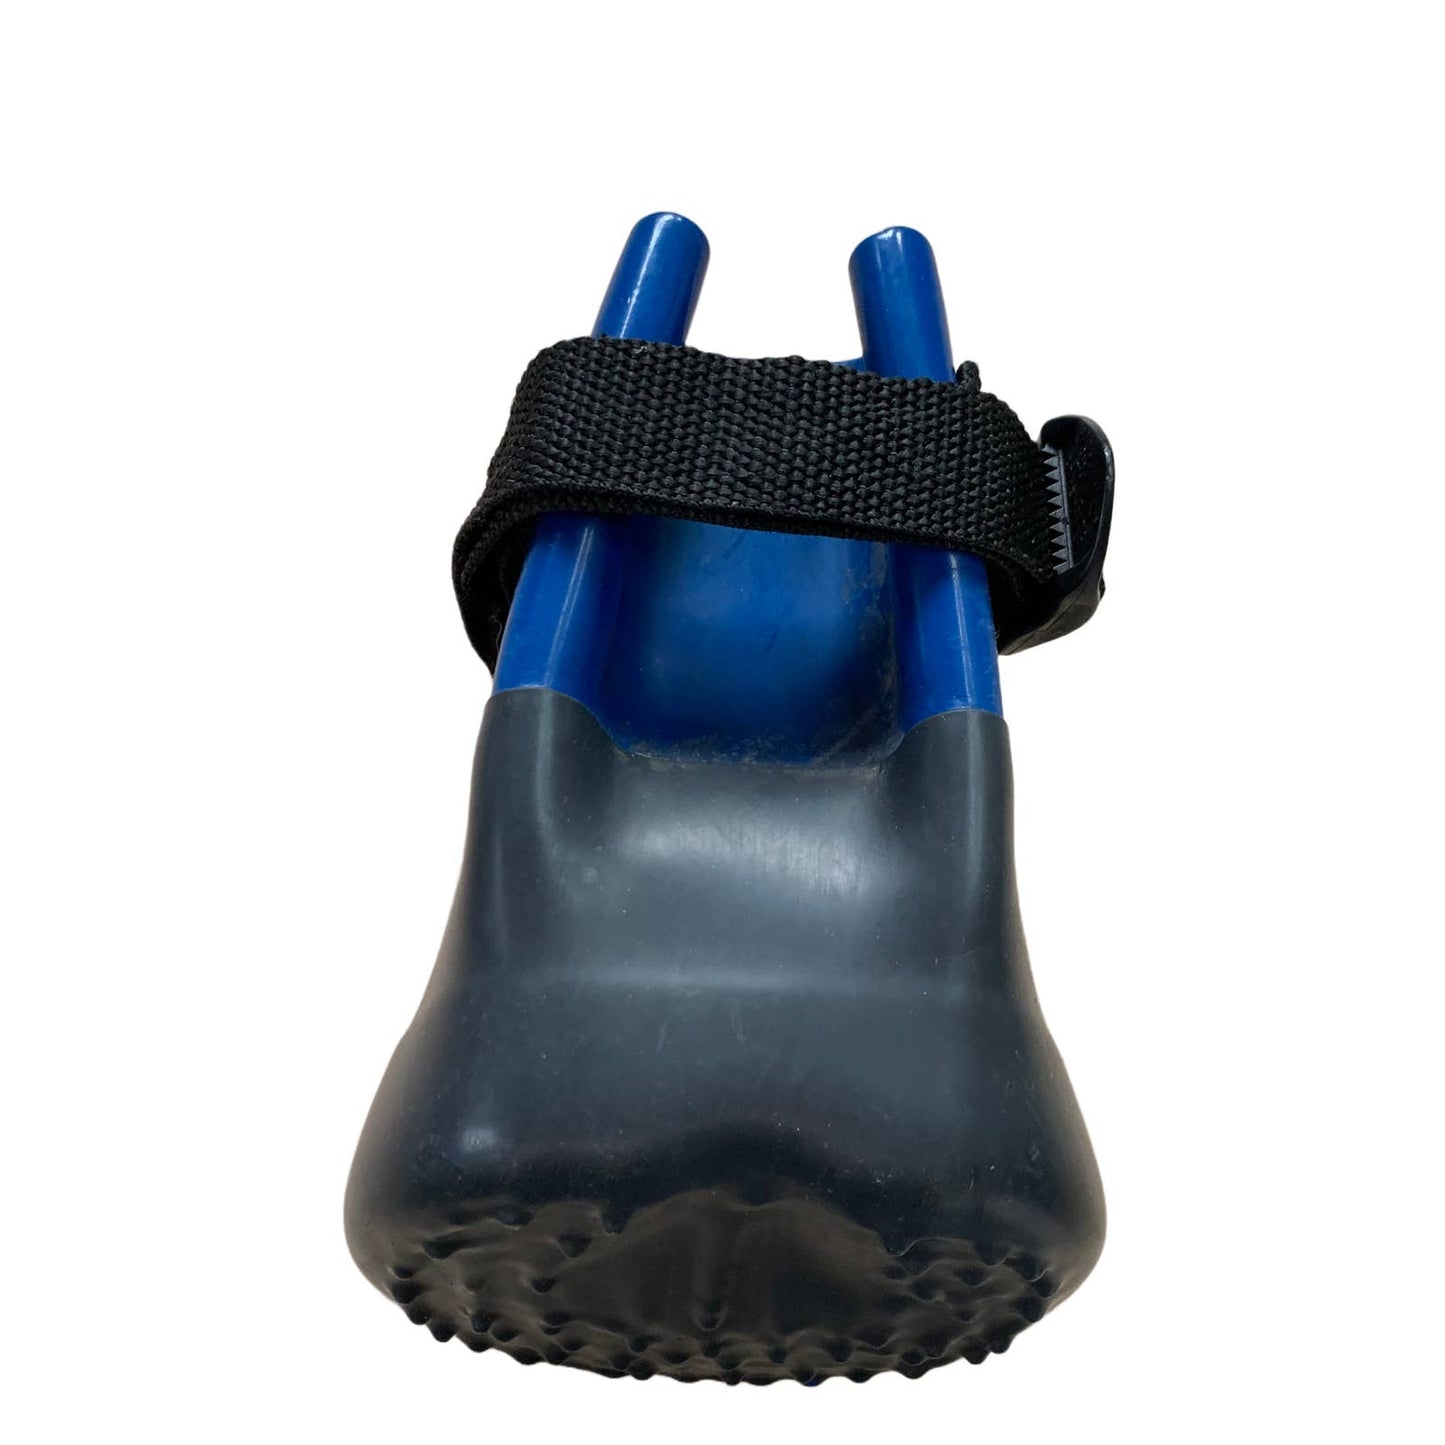 Davis Horse Hoof Saver Medicine Soaking Boot in Blue - Size 1